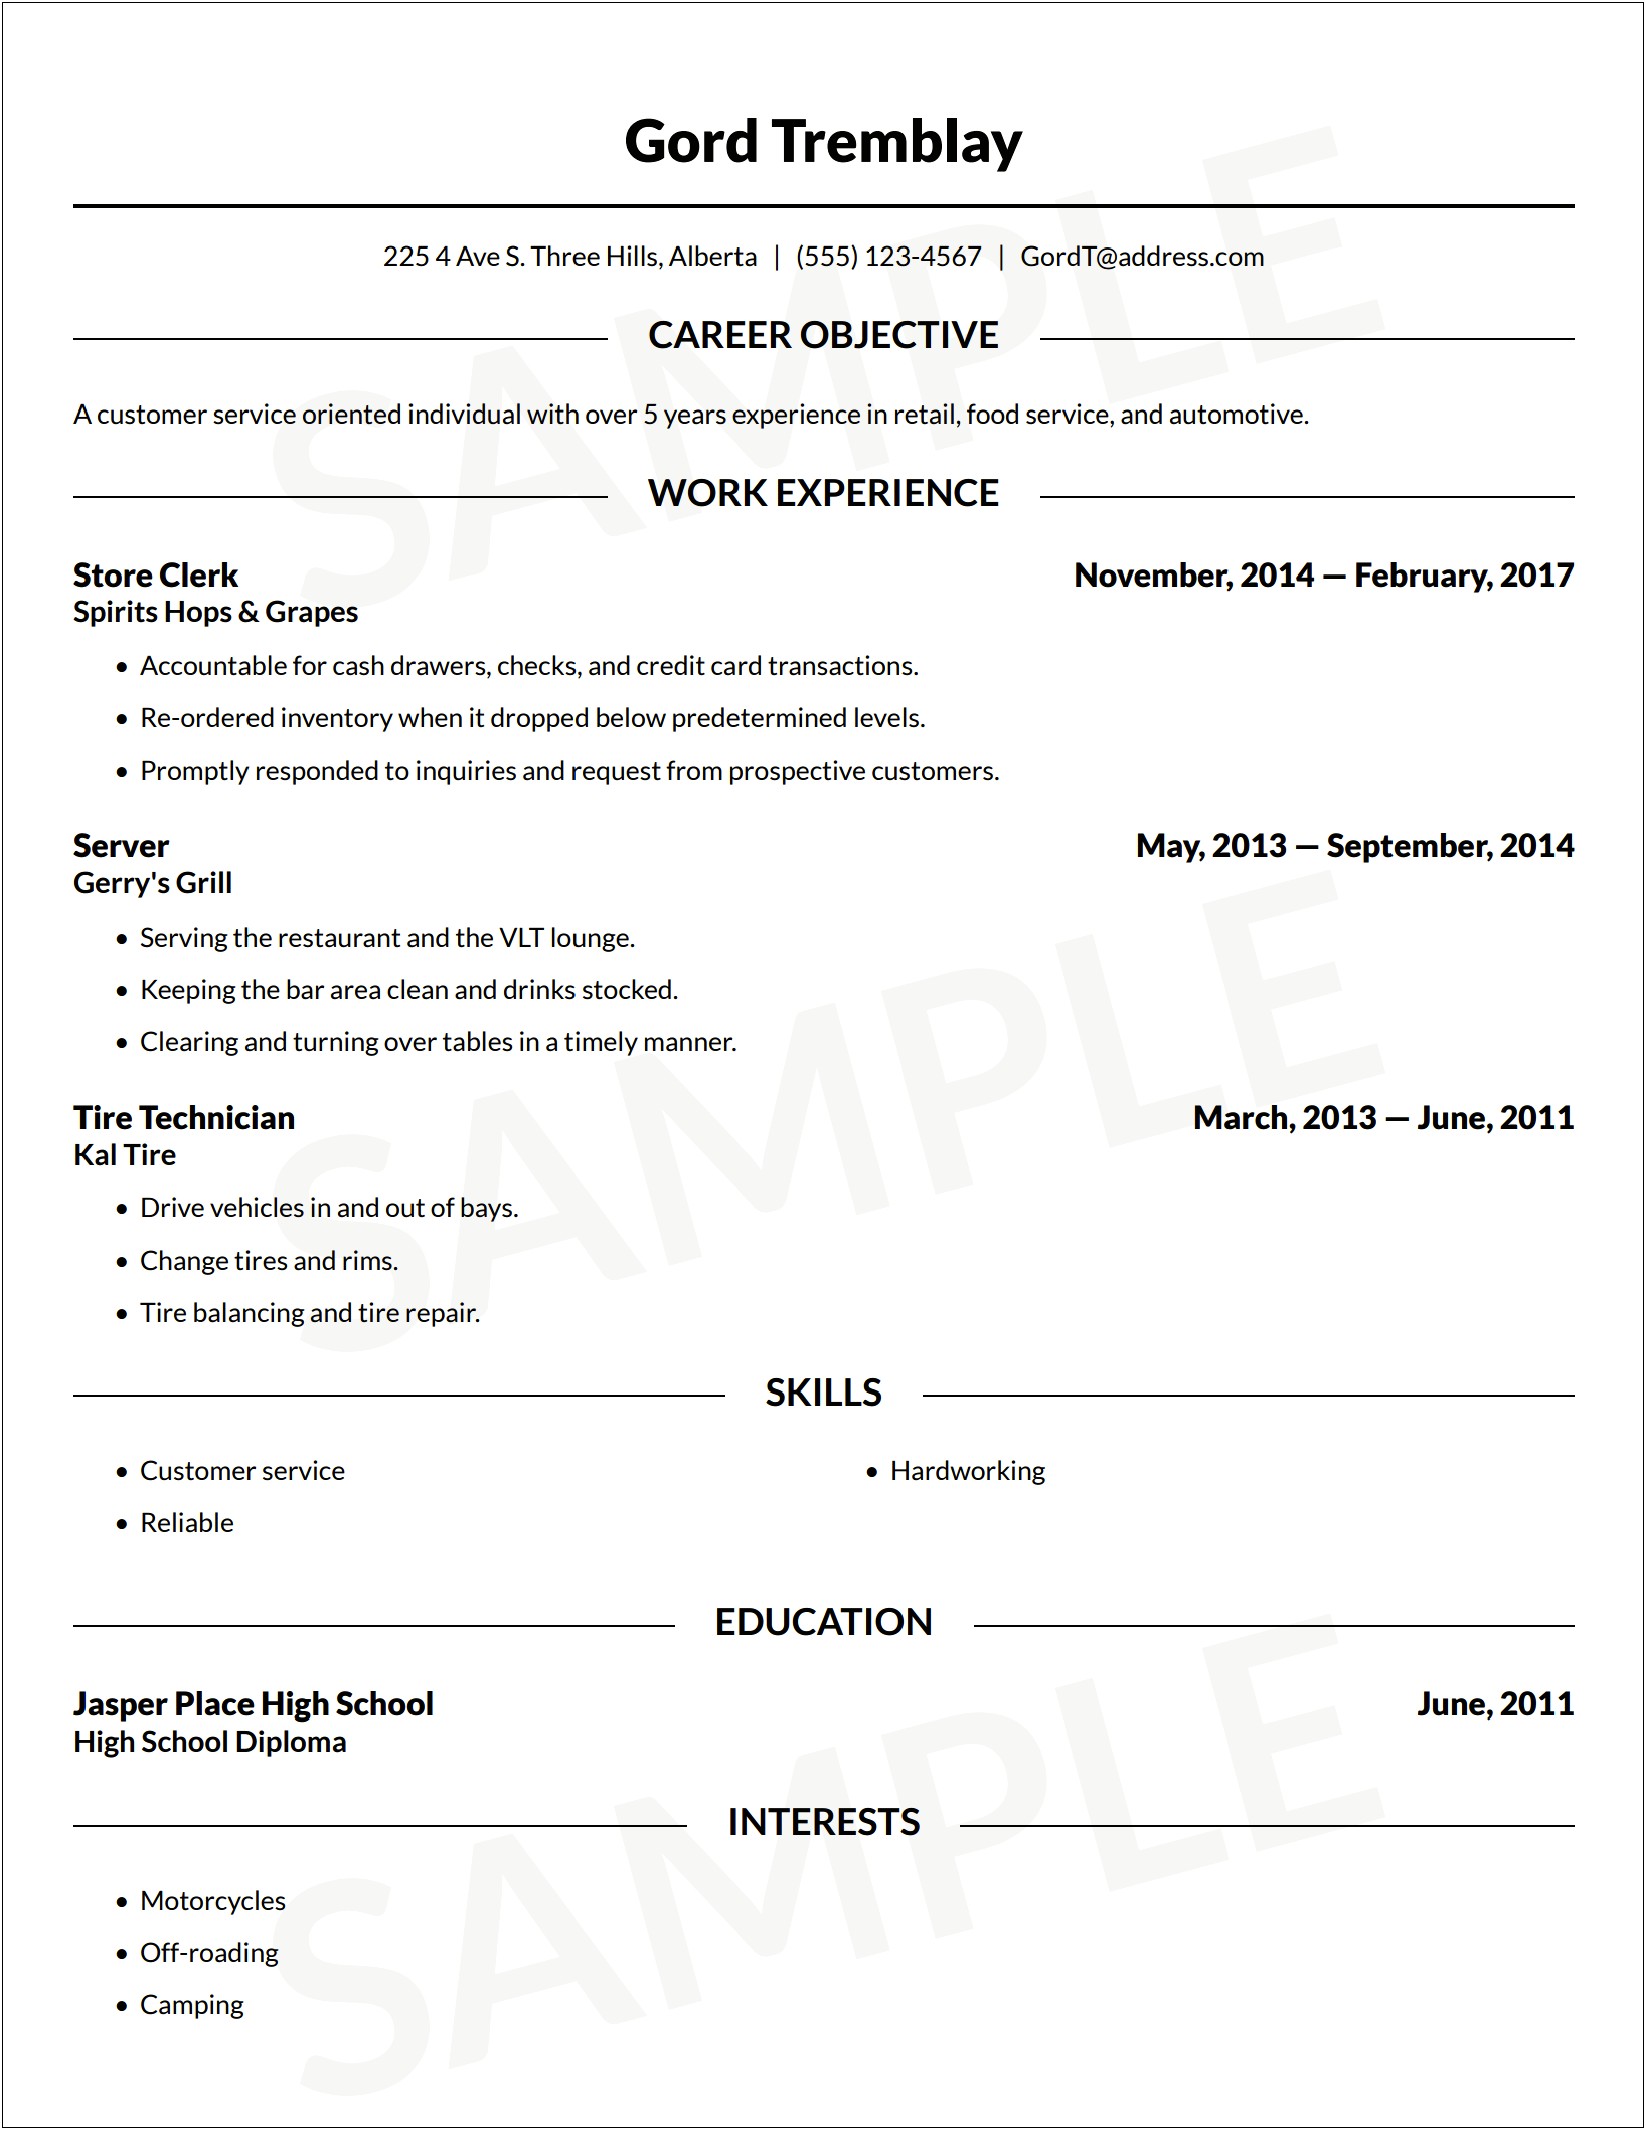 Sample Resume For Job Application In Canada